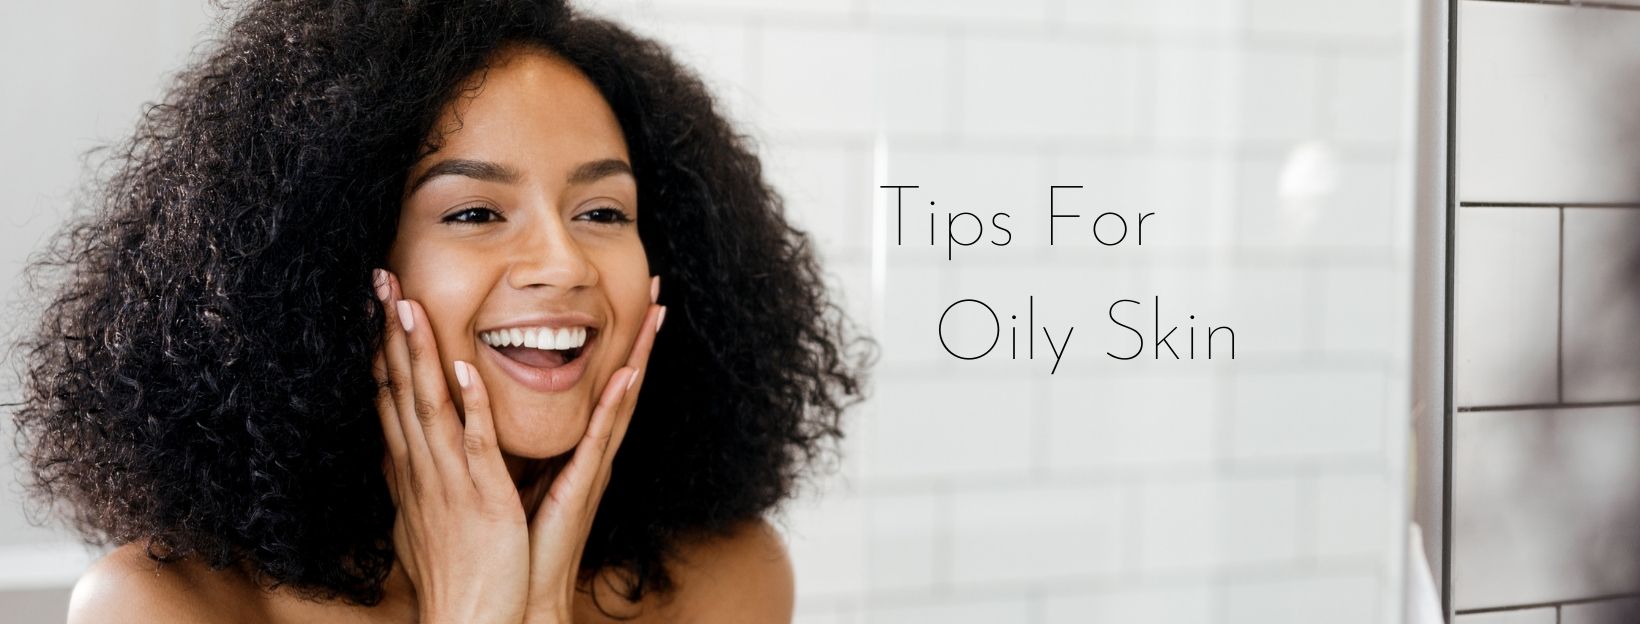 how to treat oily skin